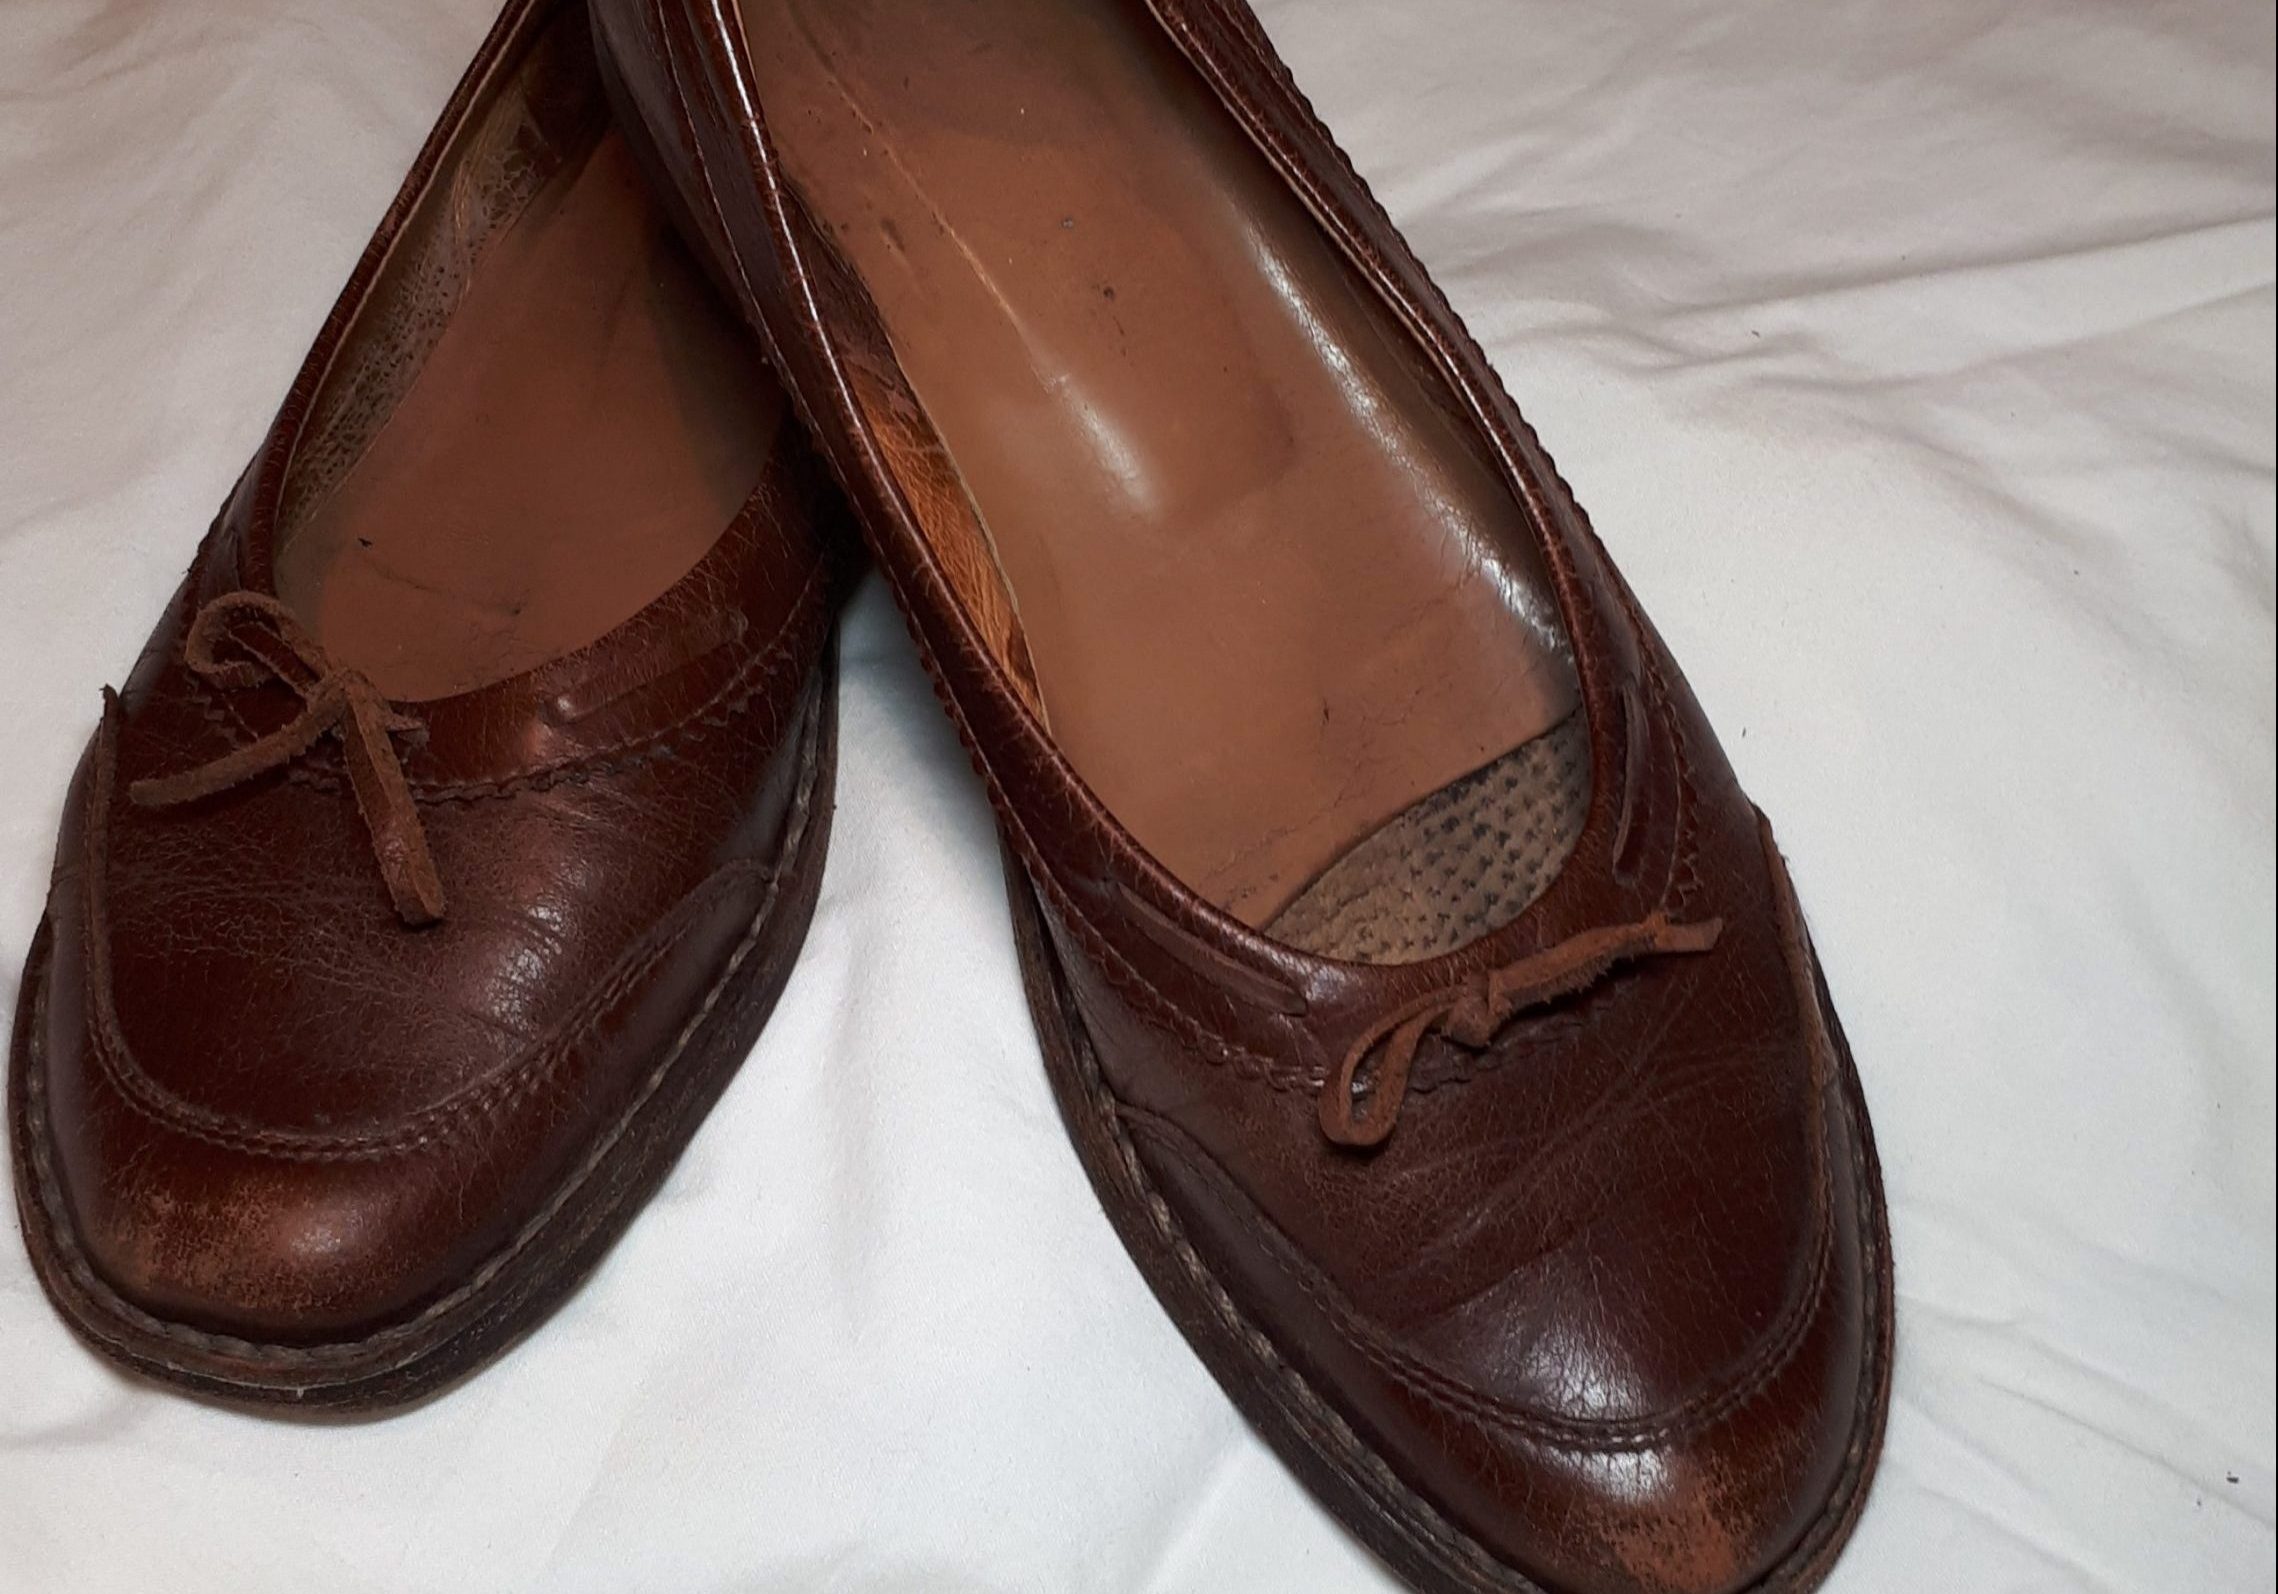 My Brown Shoes_Fatima Dzhigkaeva_#156-1